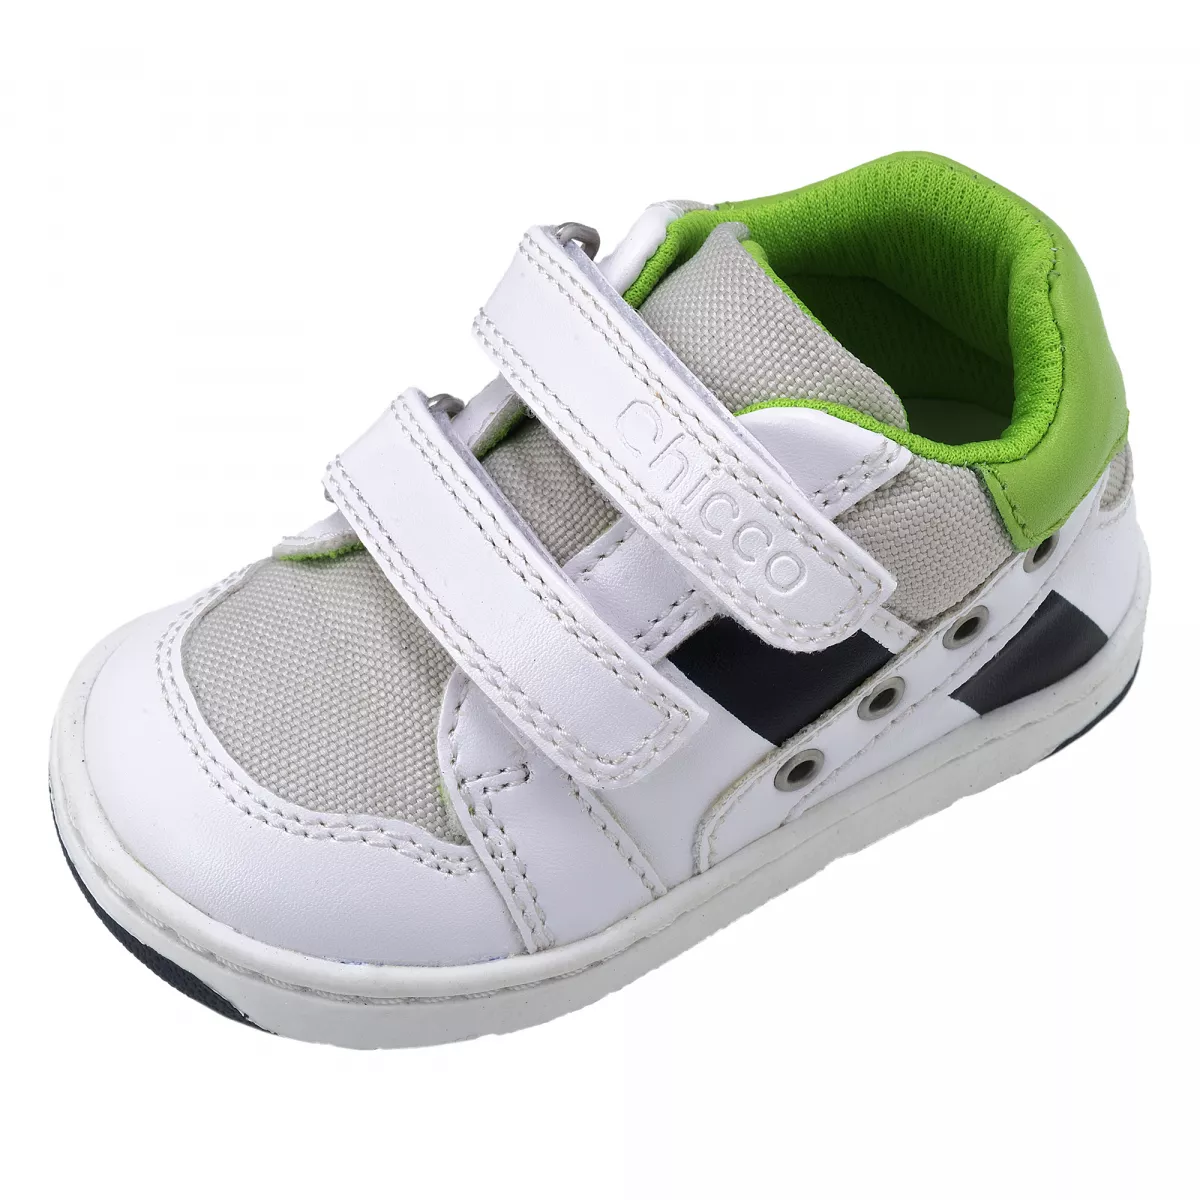 Pantofi sport copii Chicco Giuliano, alb cu model, 65653, 19